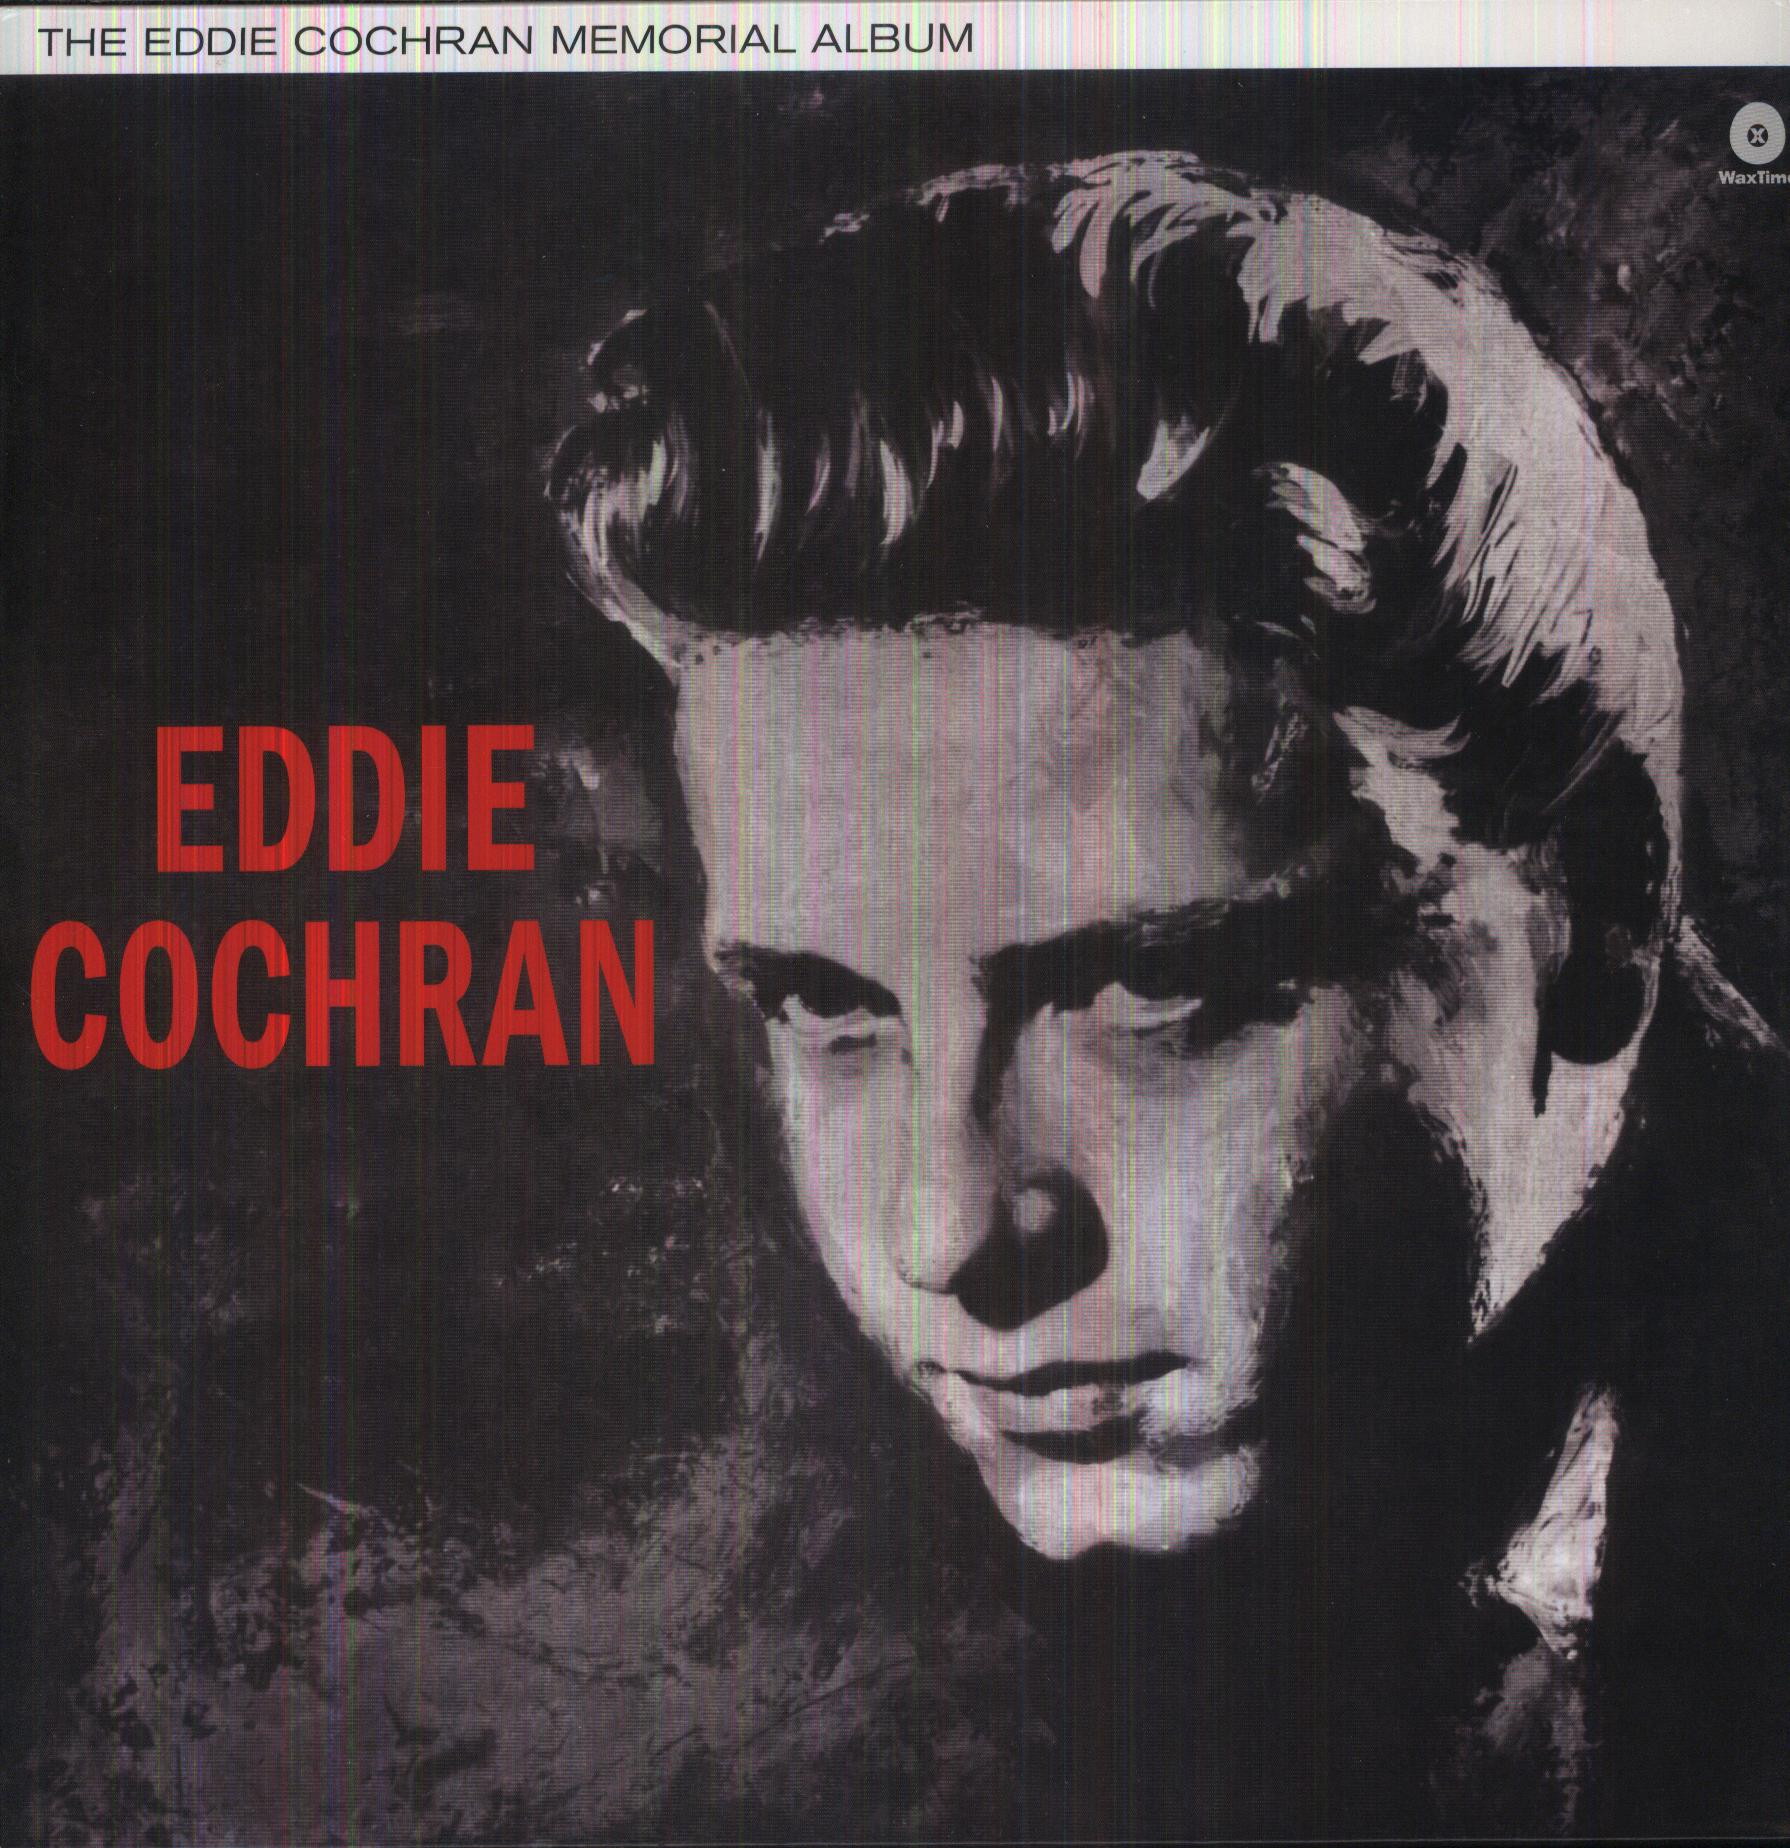 EDDIE COCHRAN MEMORIAL ALBUM (OGV)